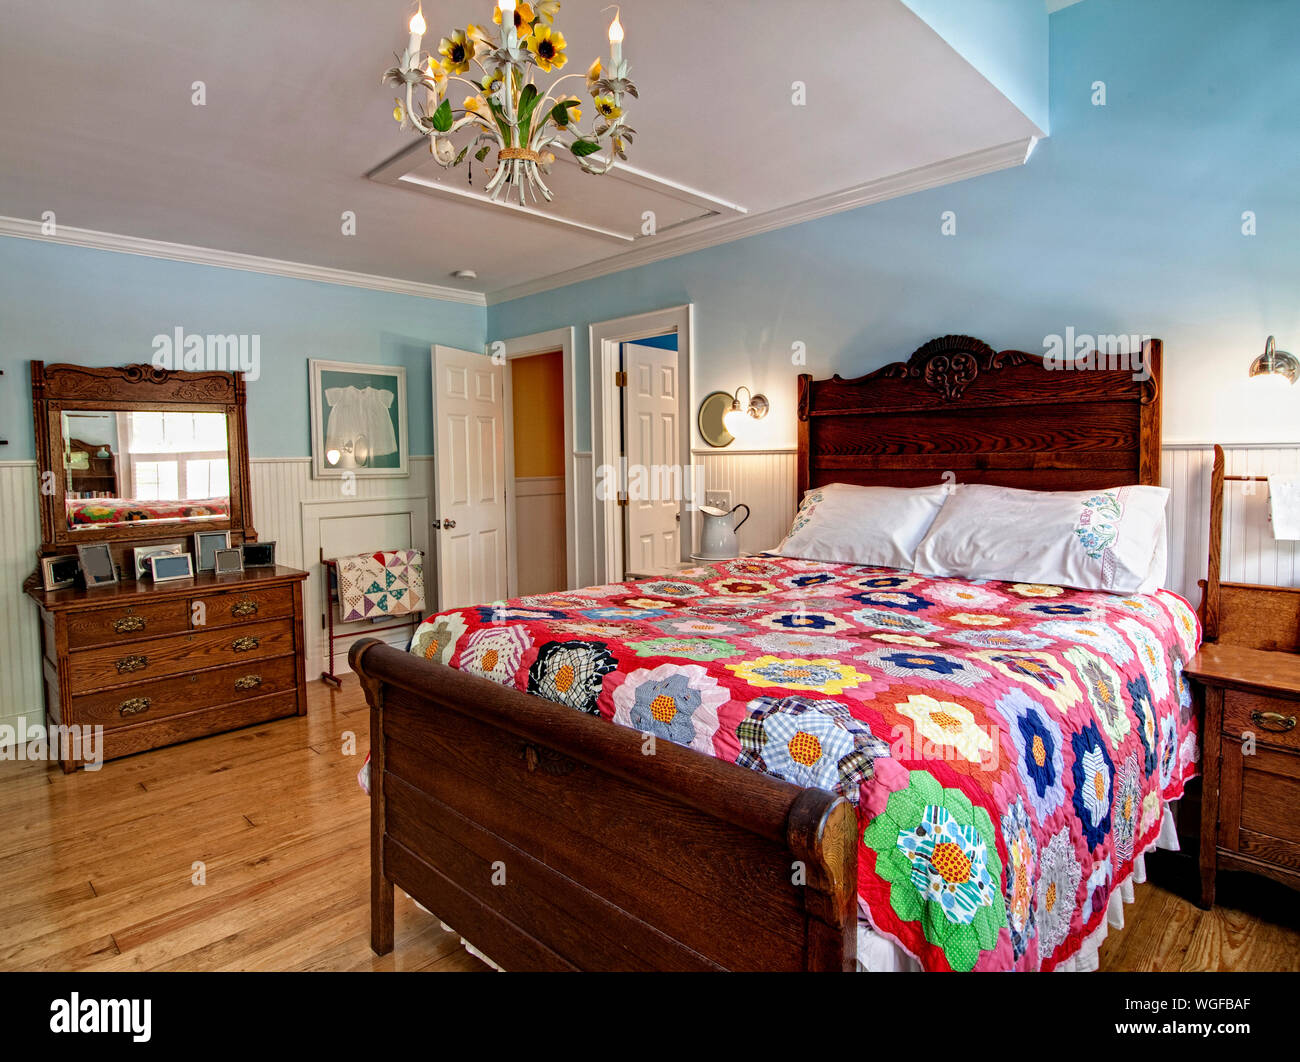 cozy, traditional bedroom interior Stock Photo